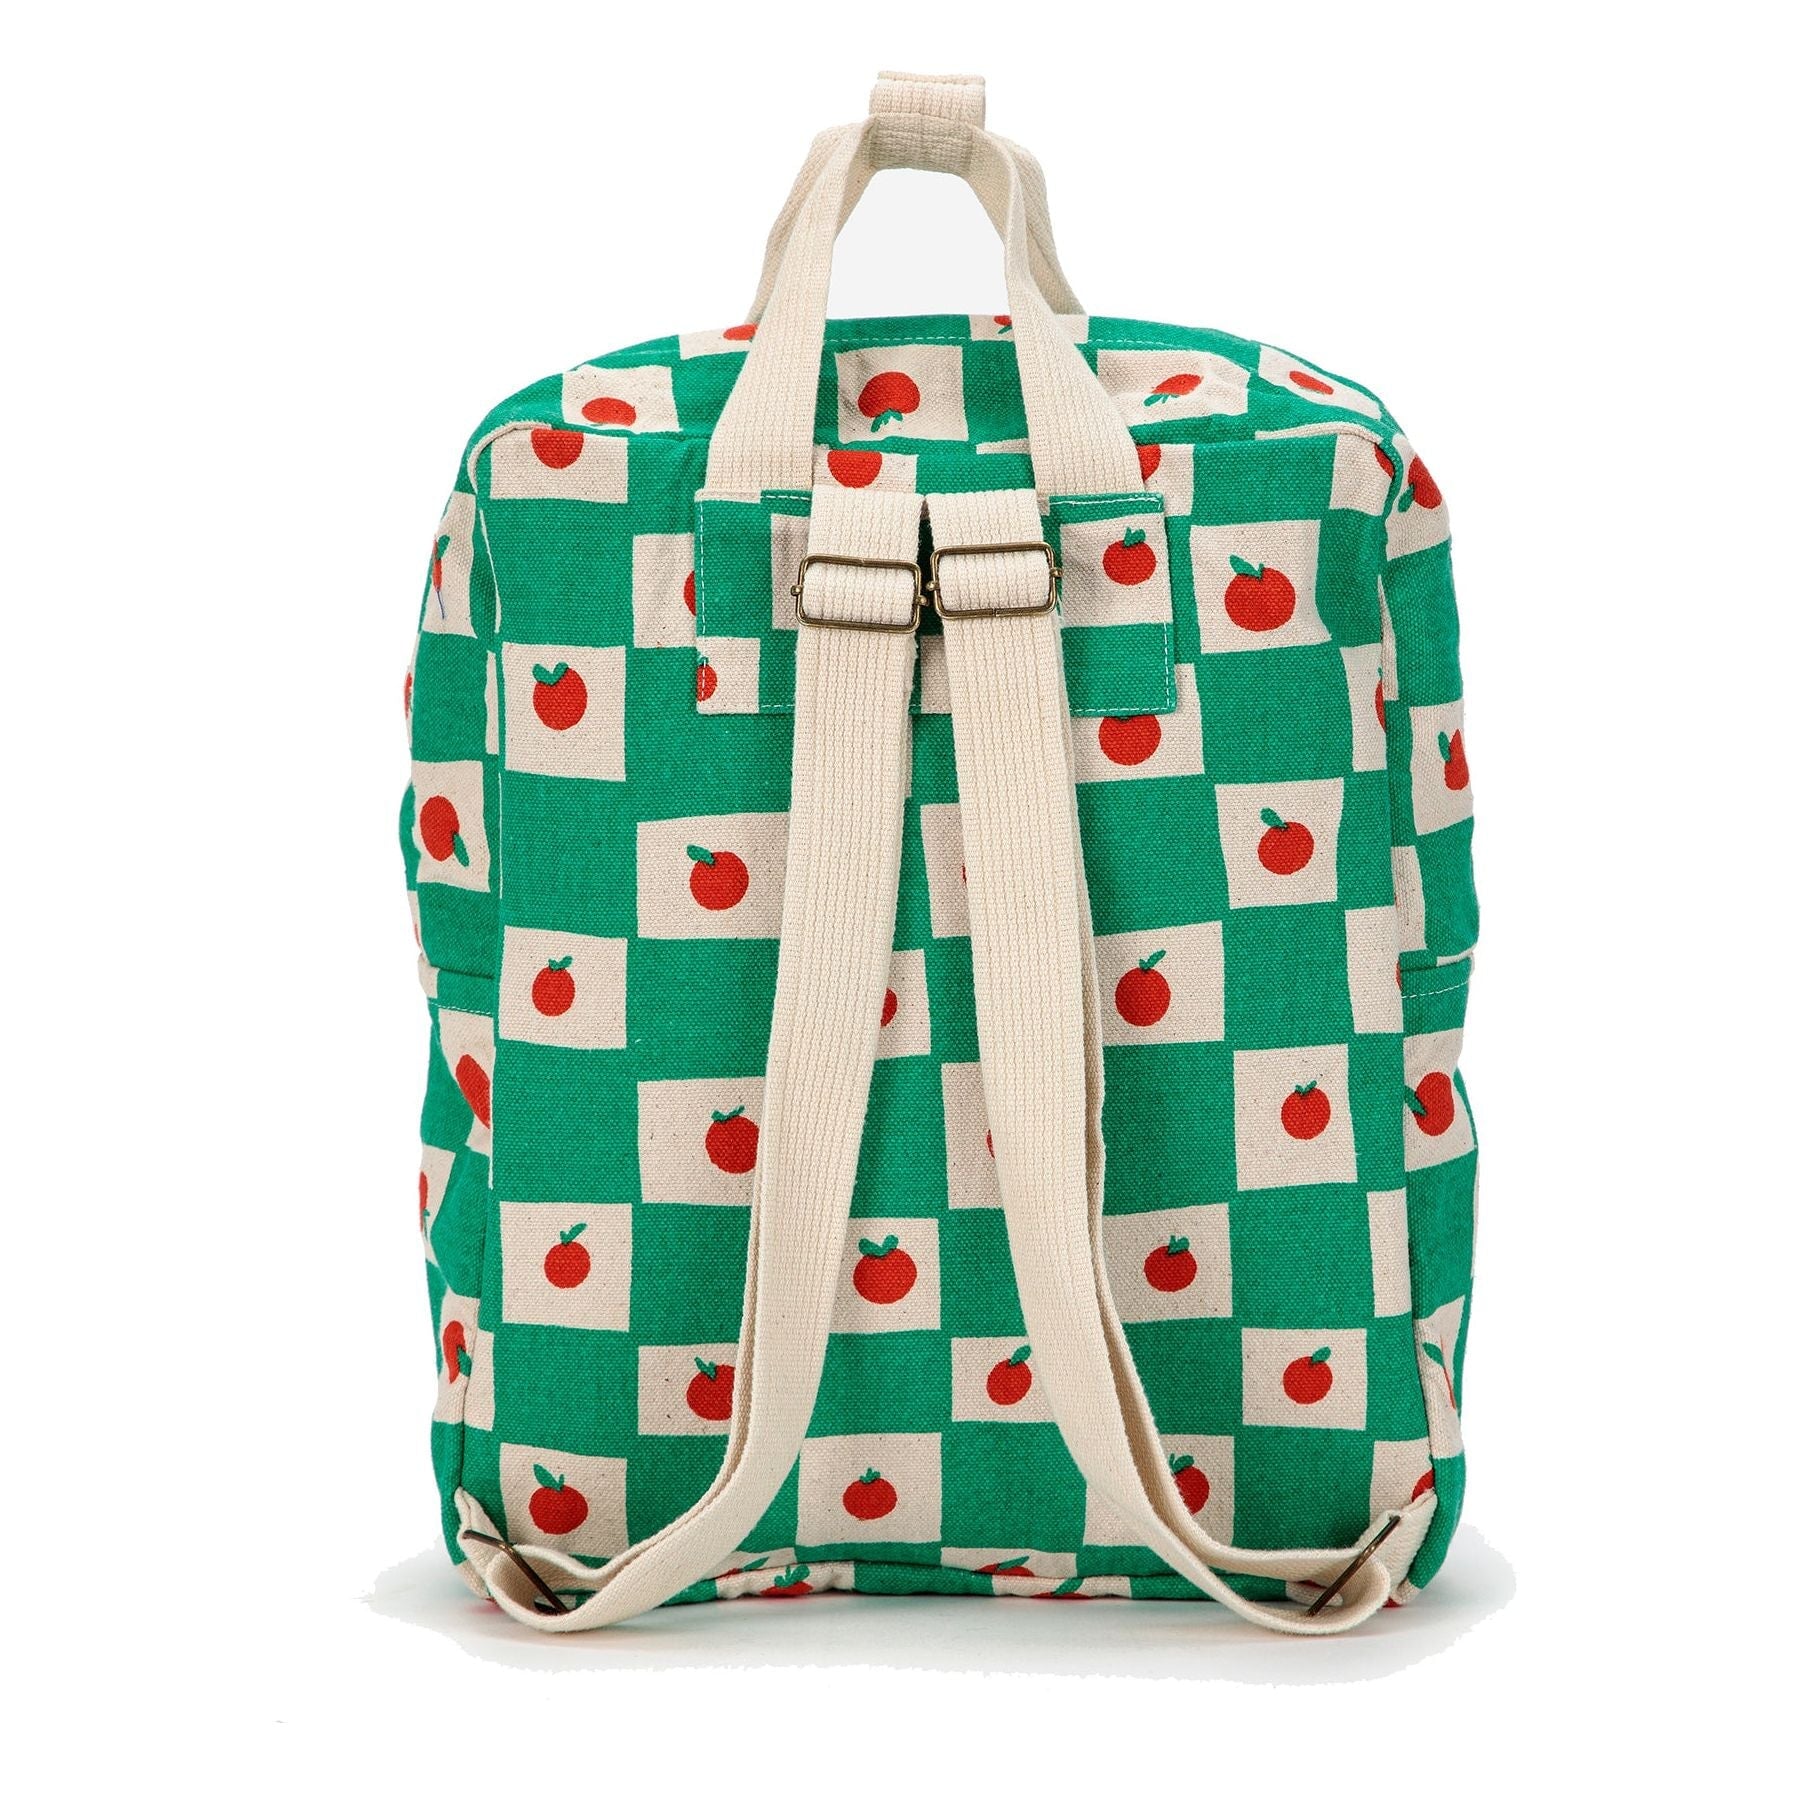 Tomato All Over School Bag